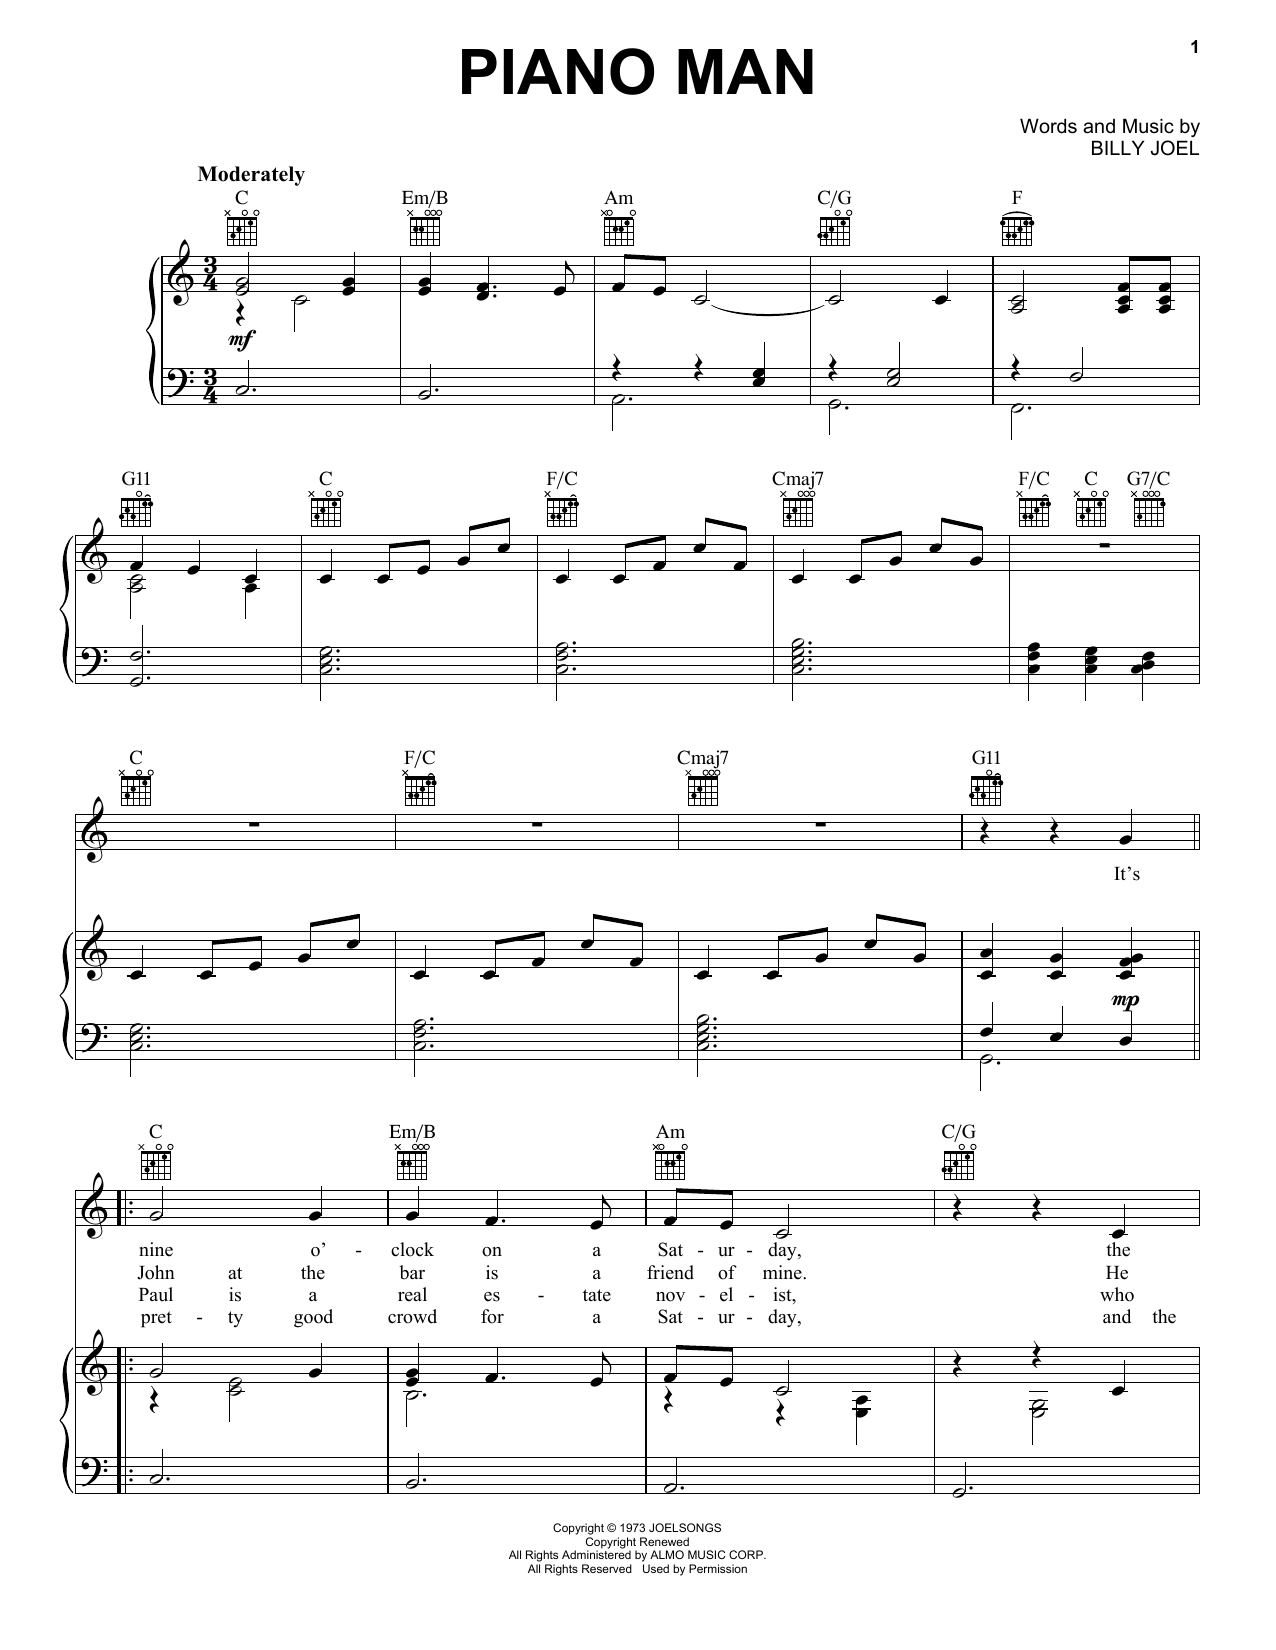 Billy Joel Piano Man Sheet Music Notes & Chords for Lead Sheet / Fake Book - Download or Print PDF